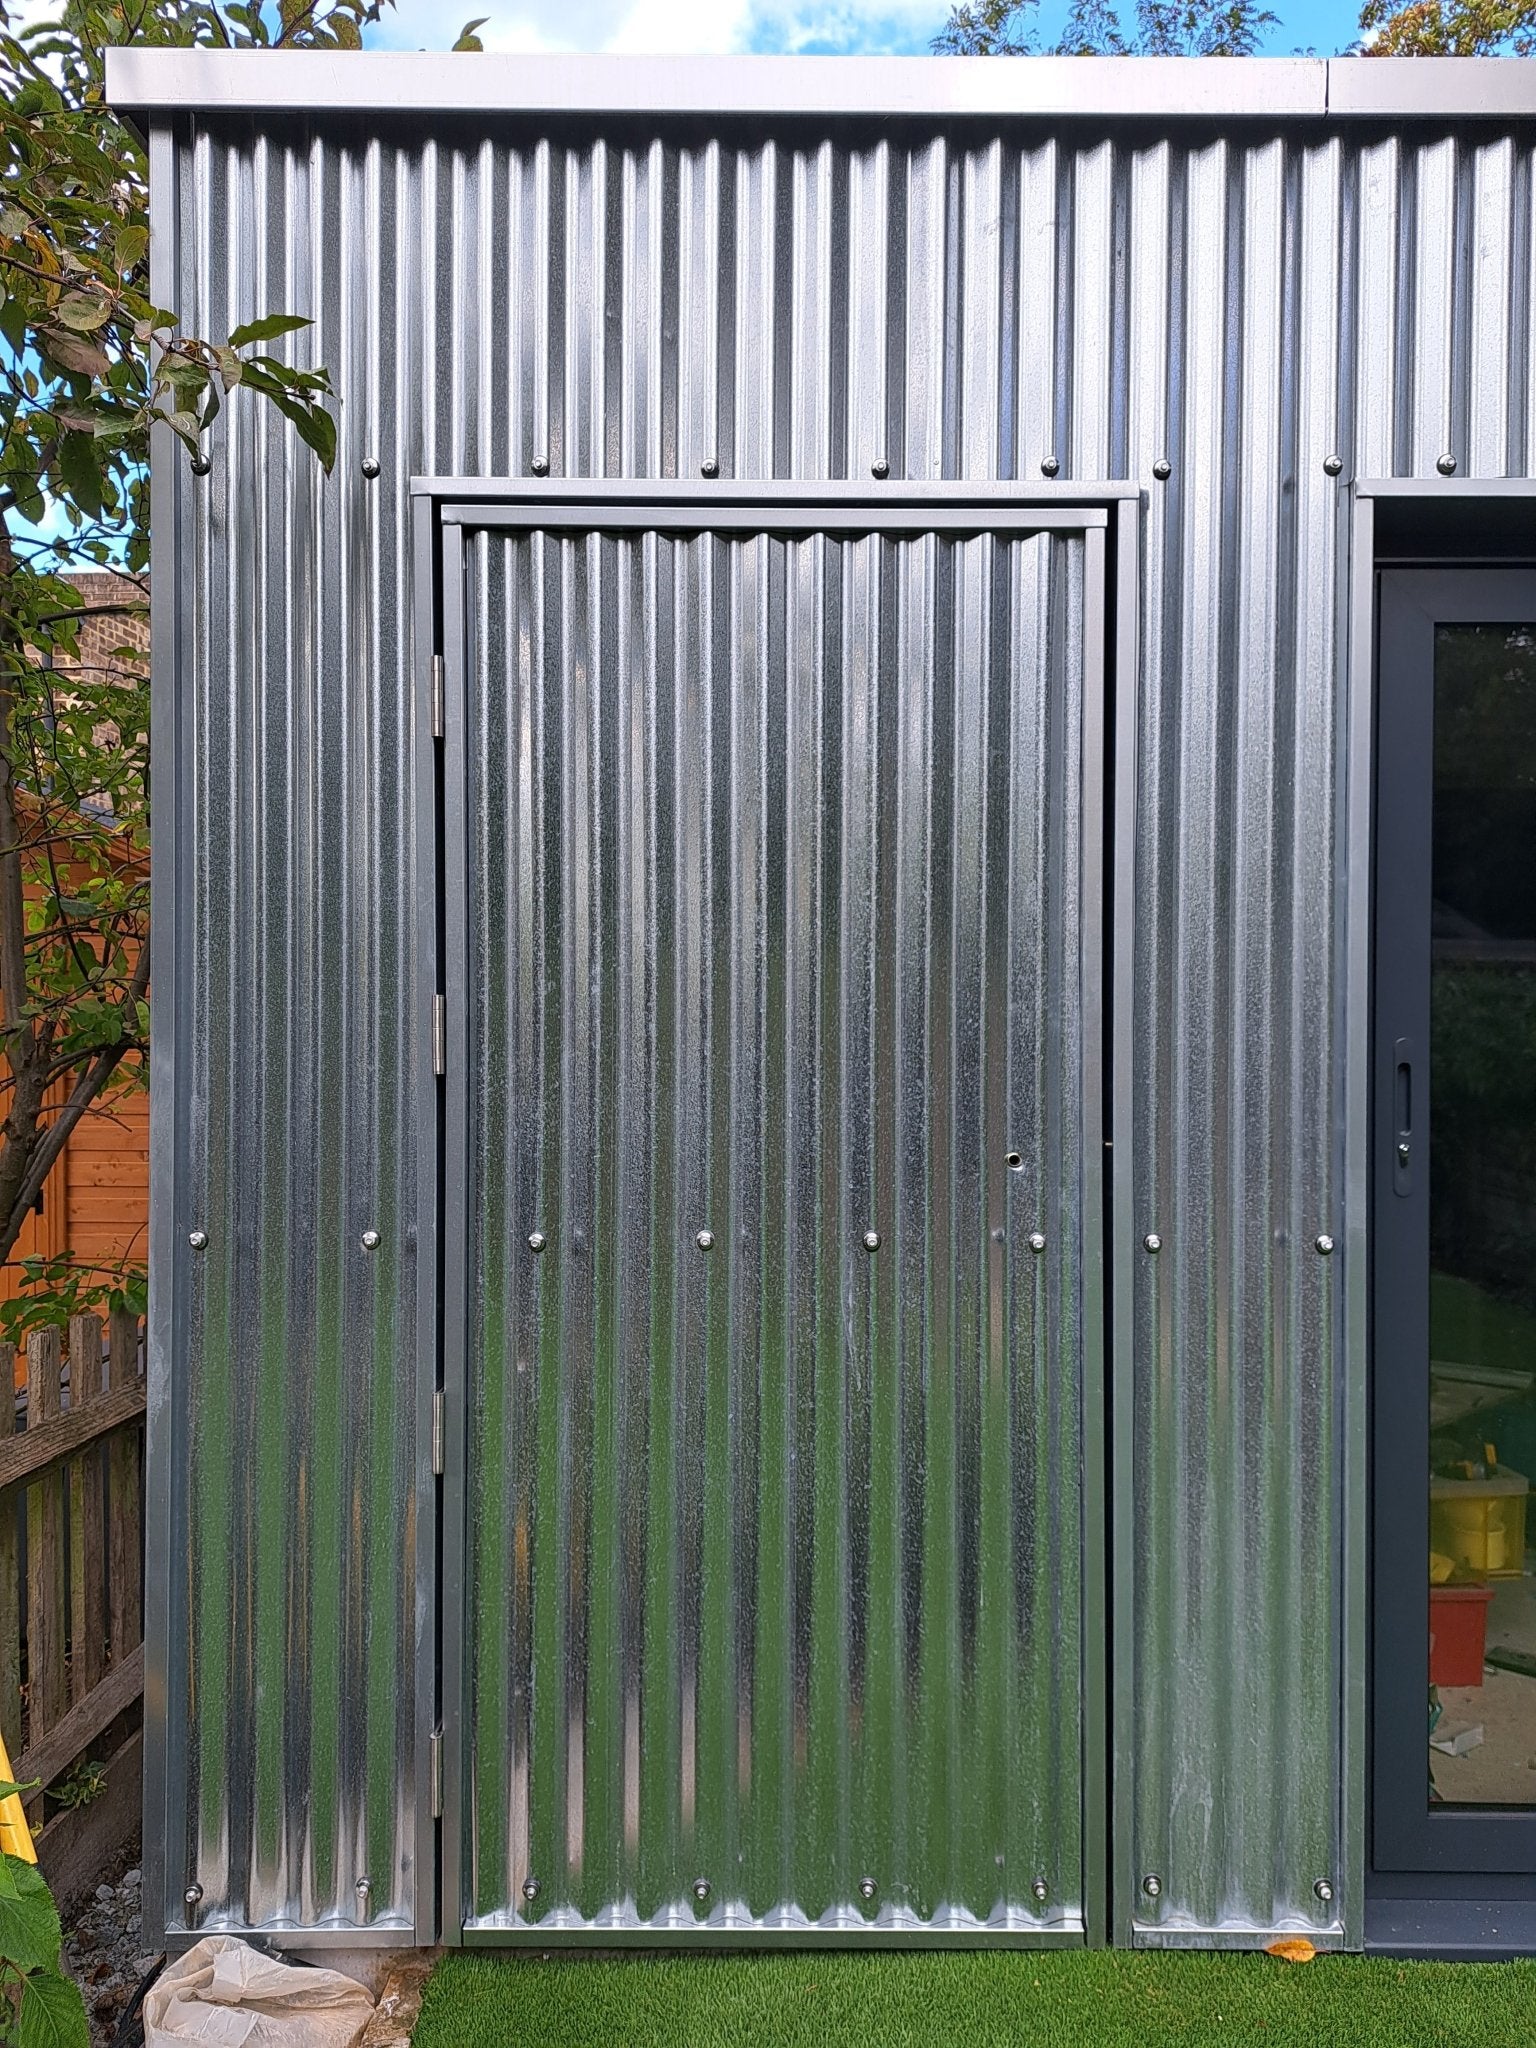 Corrugated 13/3 Profile Plain Galvanised finish 0.7mm Metal Roof Sheet - Trade Warehouse